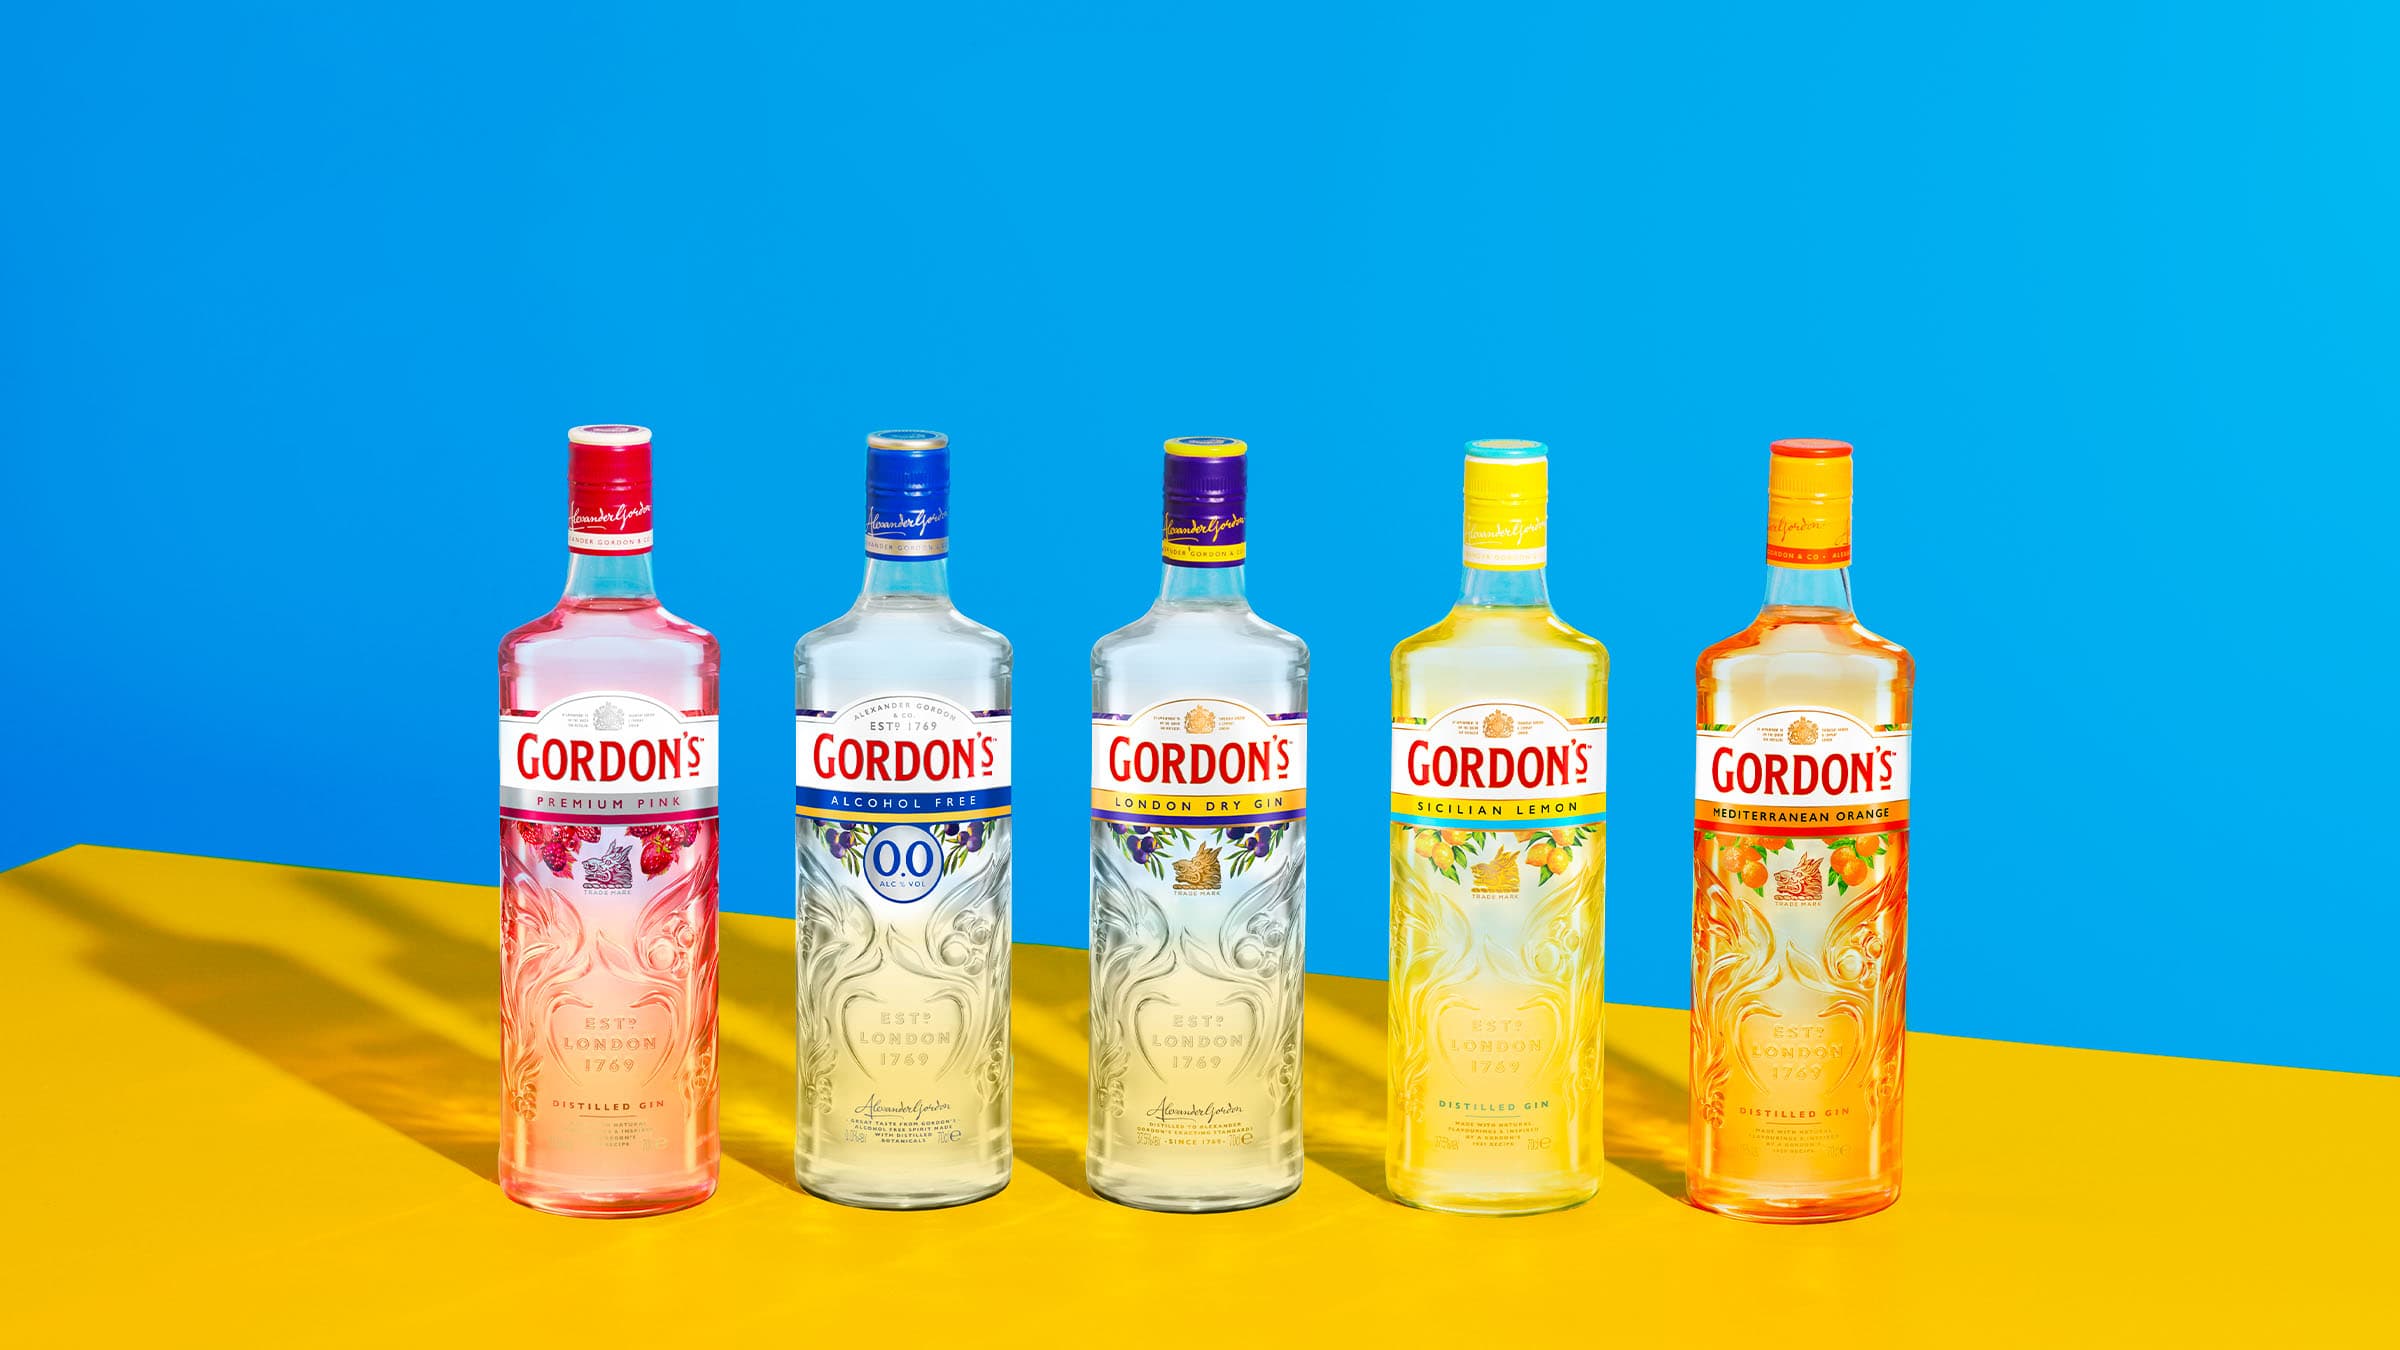 Cinco botellas de diferentes variedades de ginebra Gordon’s sobre un fondo azul y amarillo brillante 